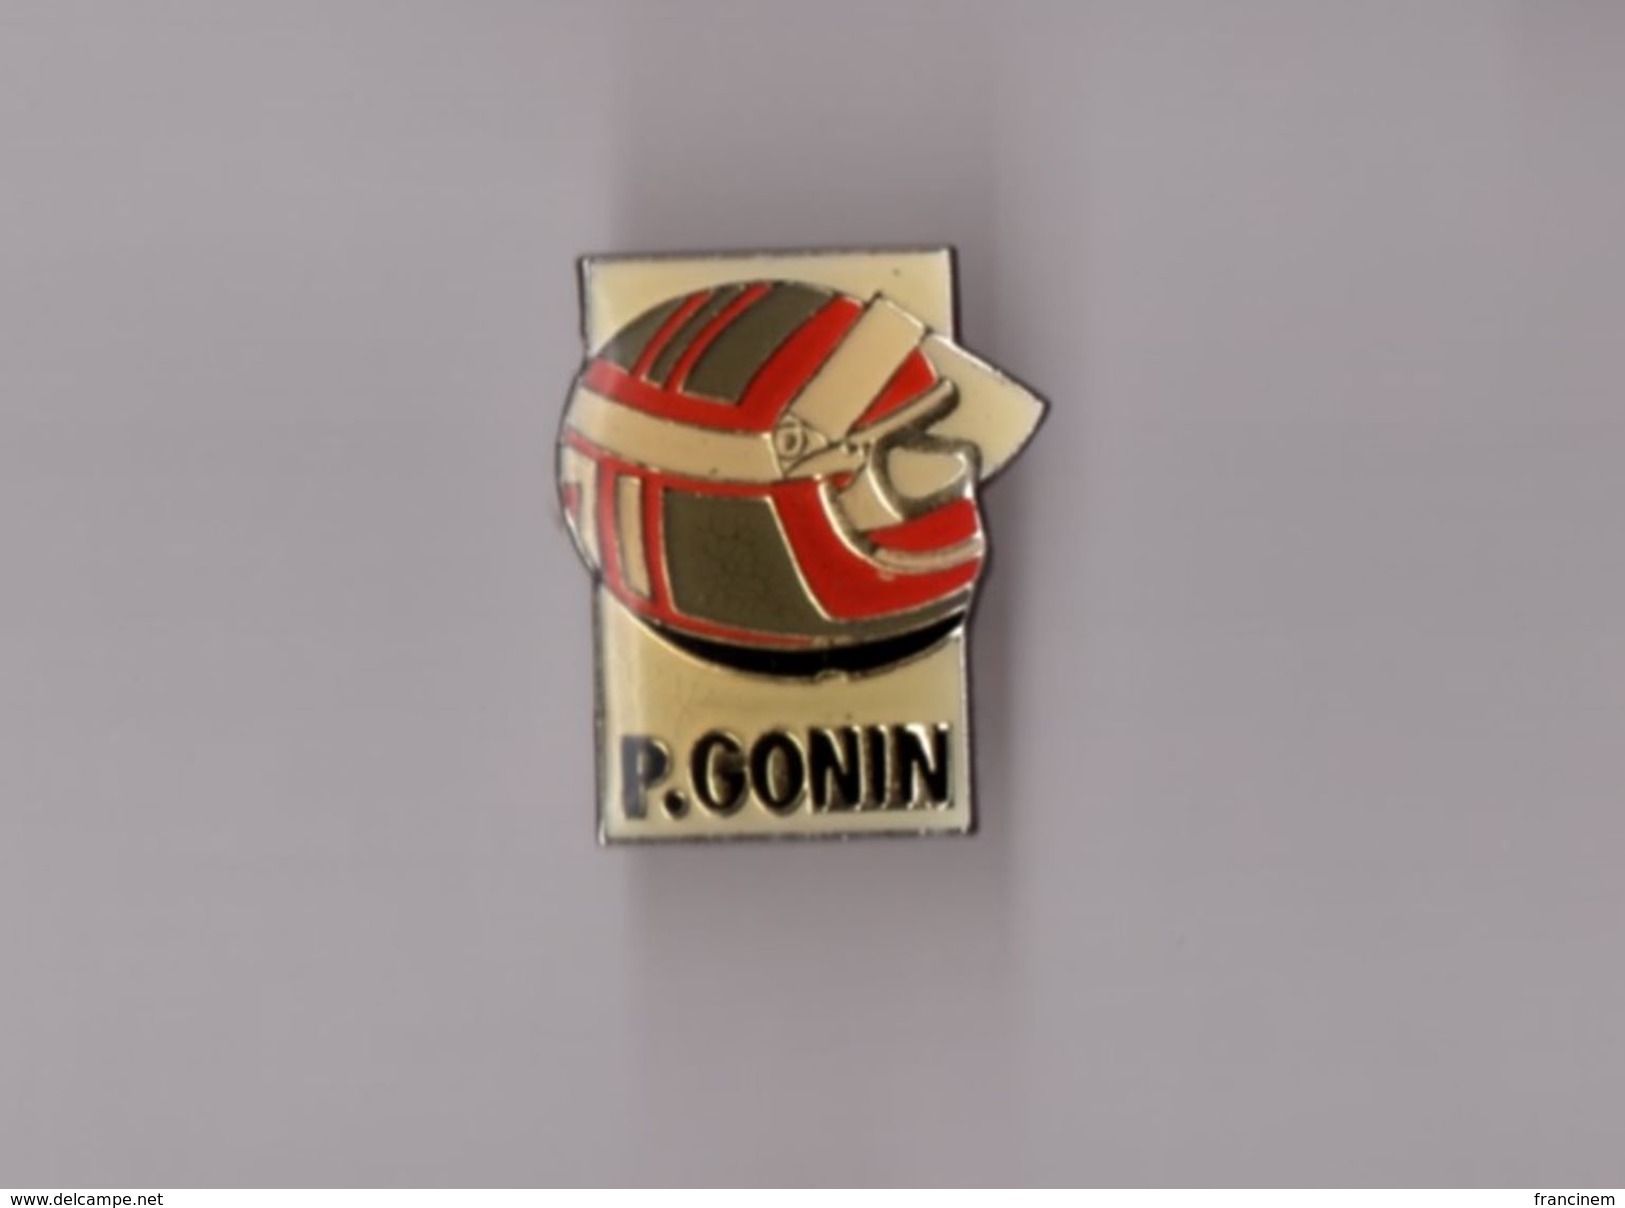 Pin's Formule 1 - Patrick Gonin - Automobile - F1